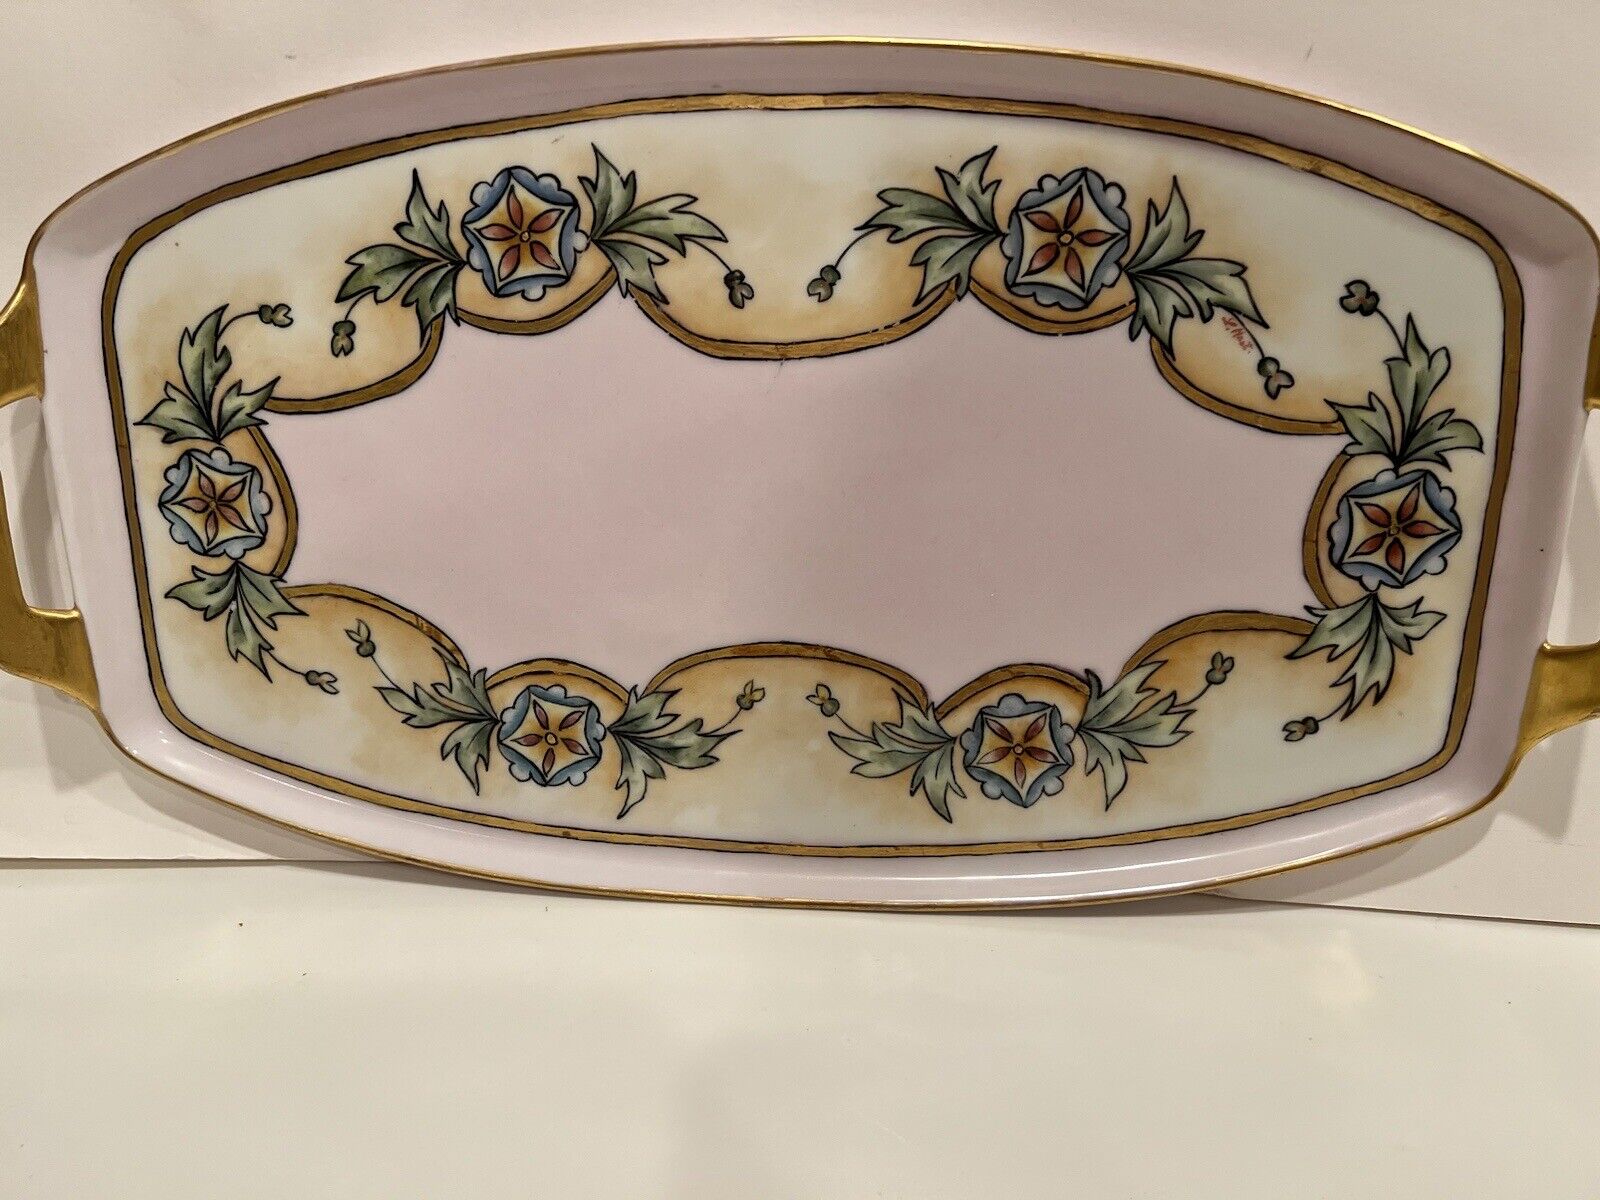 ANTIQUE Rectangular Dresser/ Vanity Tray 1900s Bavaria Germany Gilt Floral